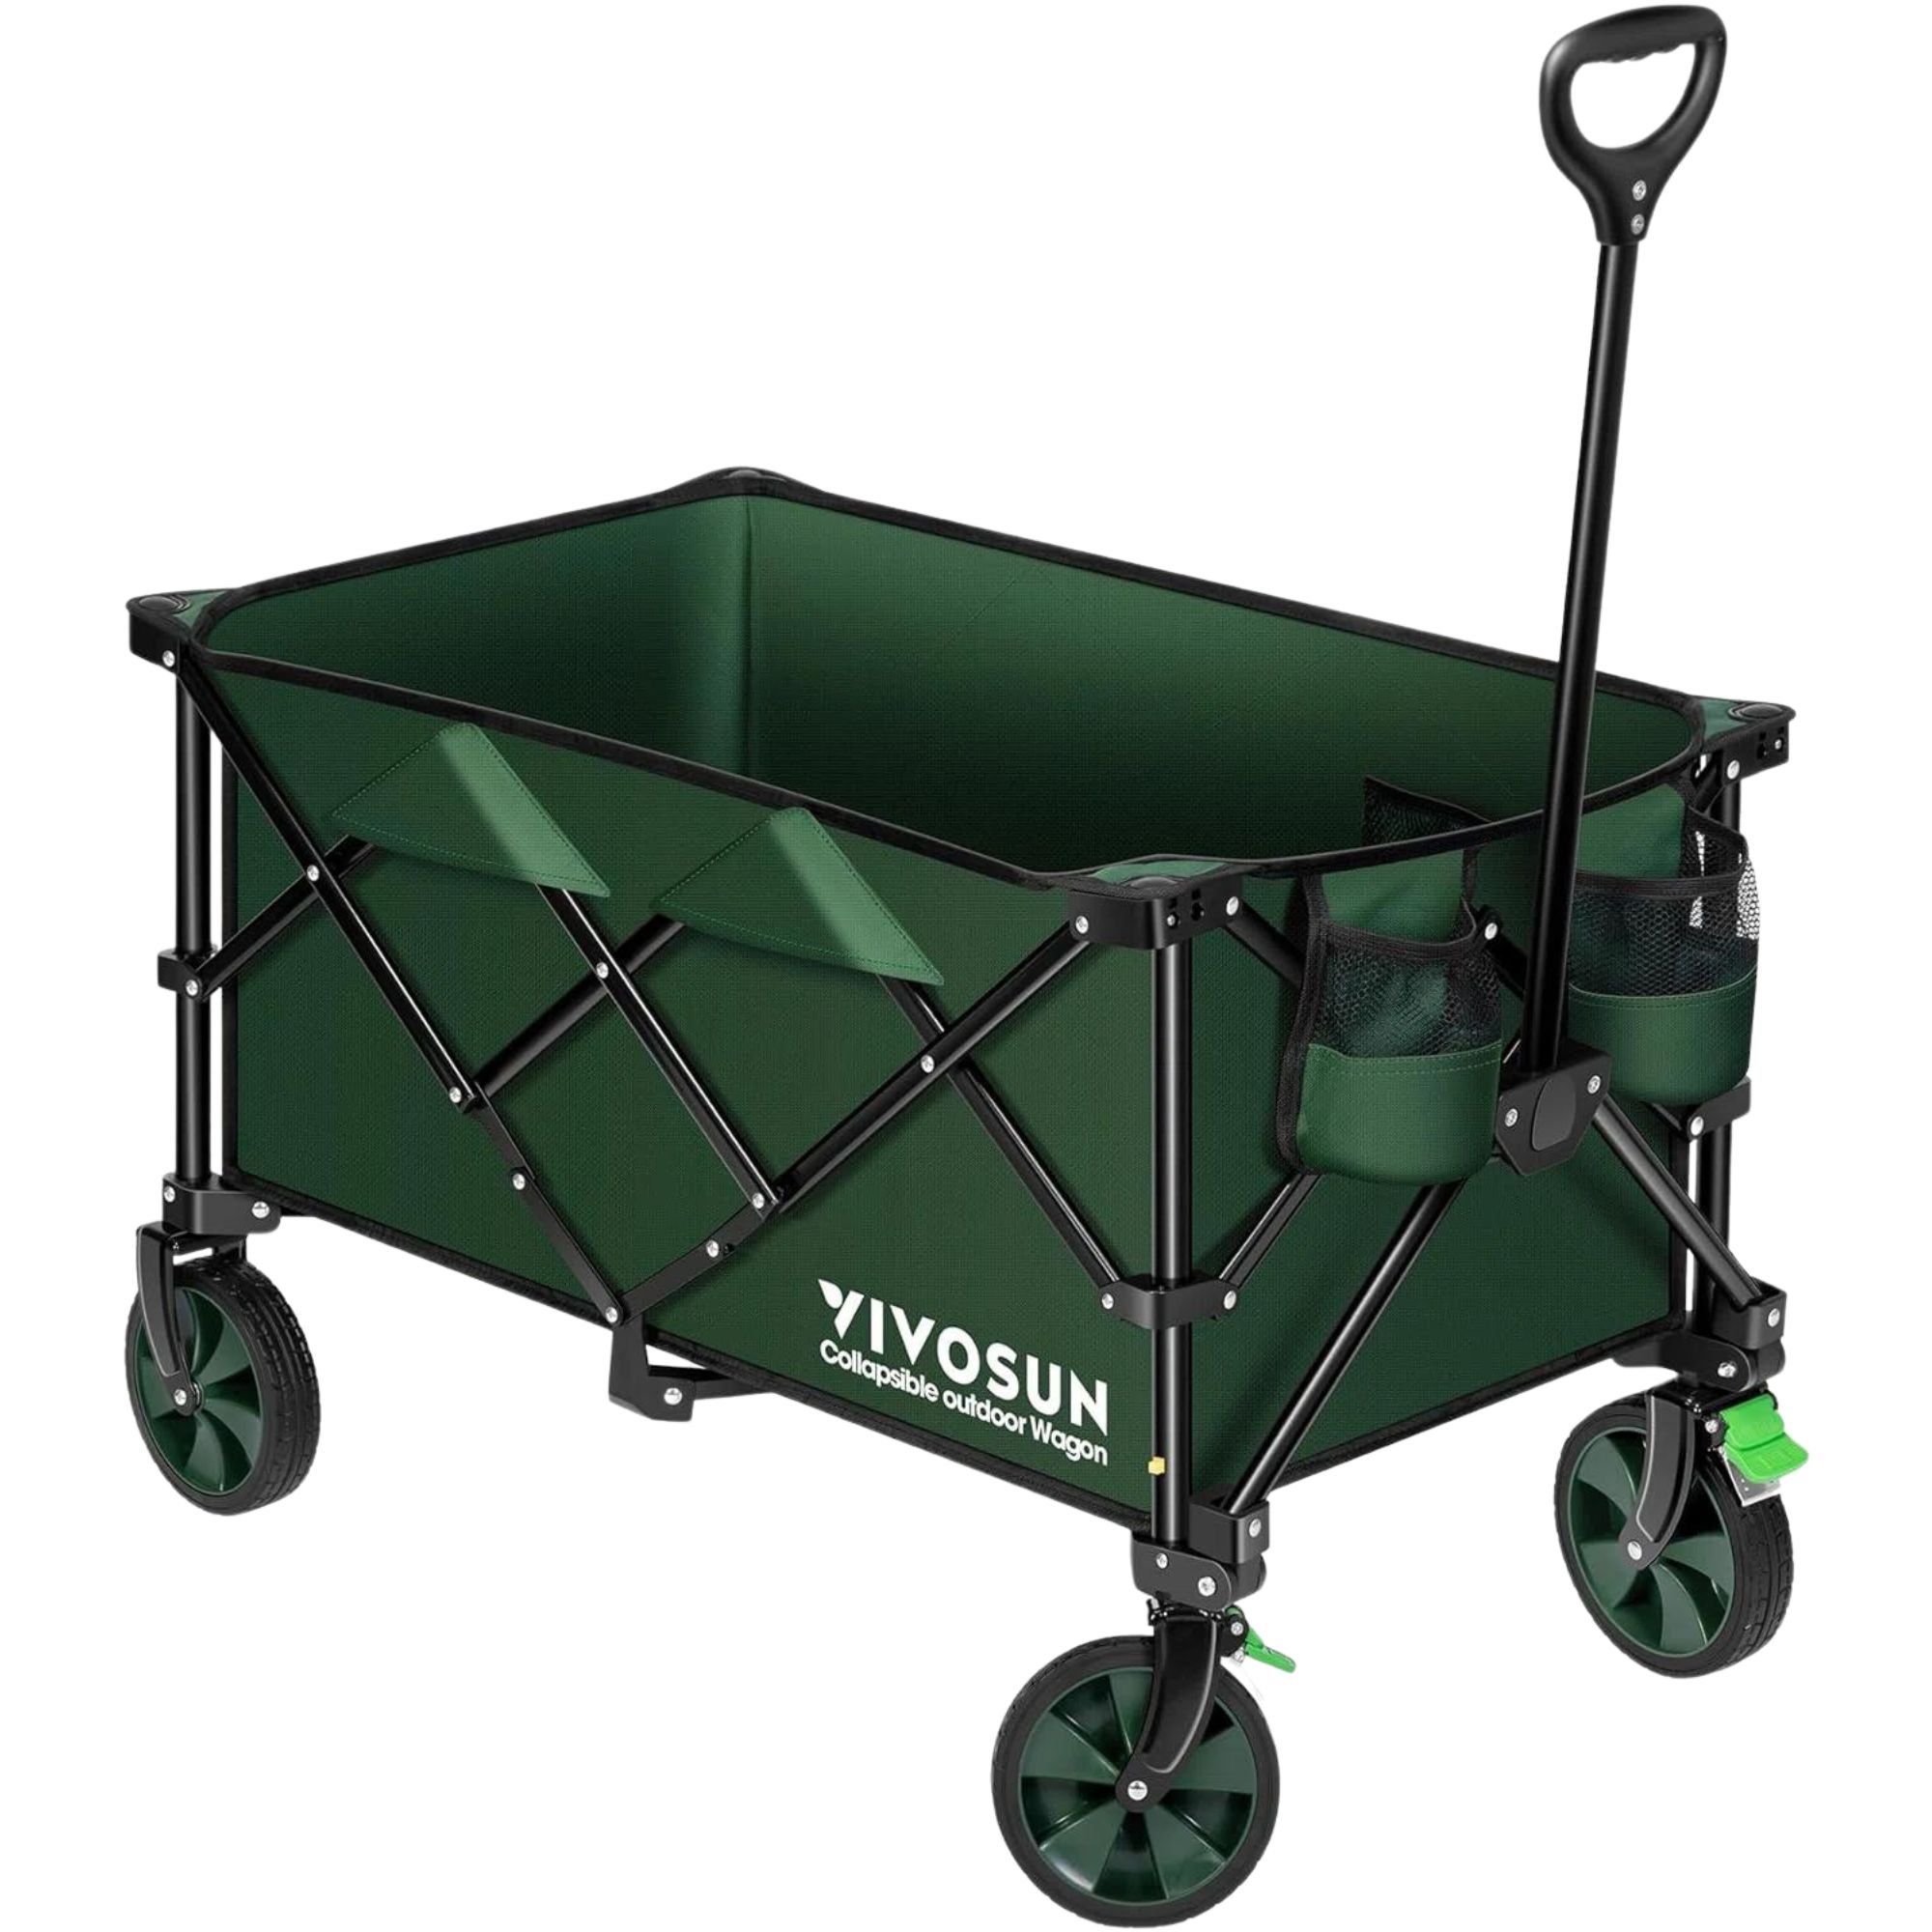 Green collapsible gardening cart